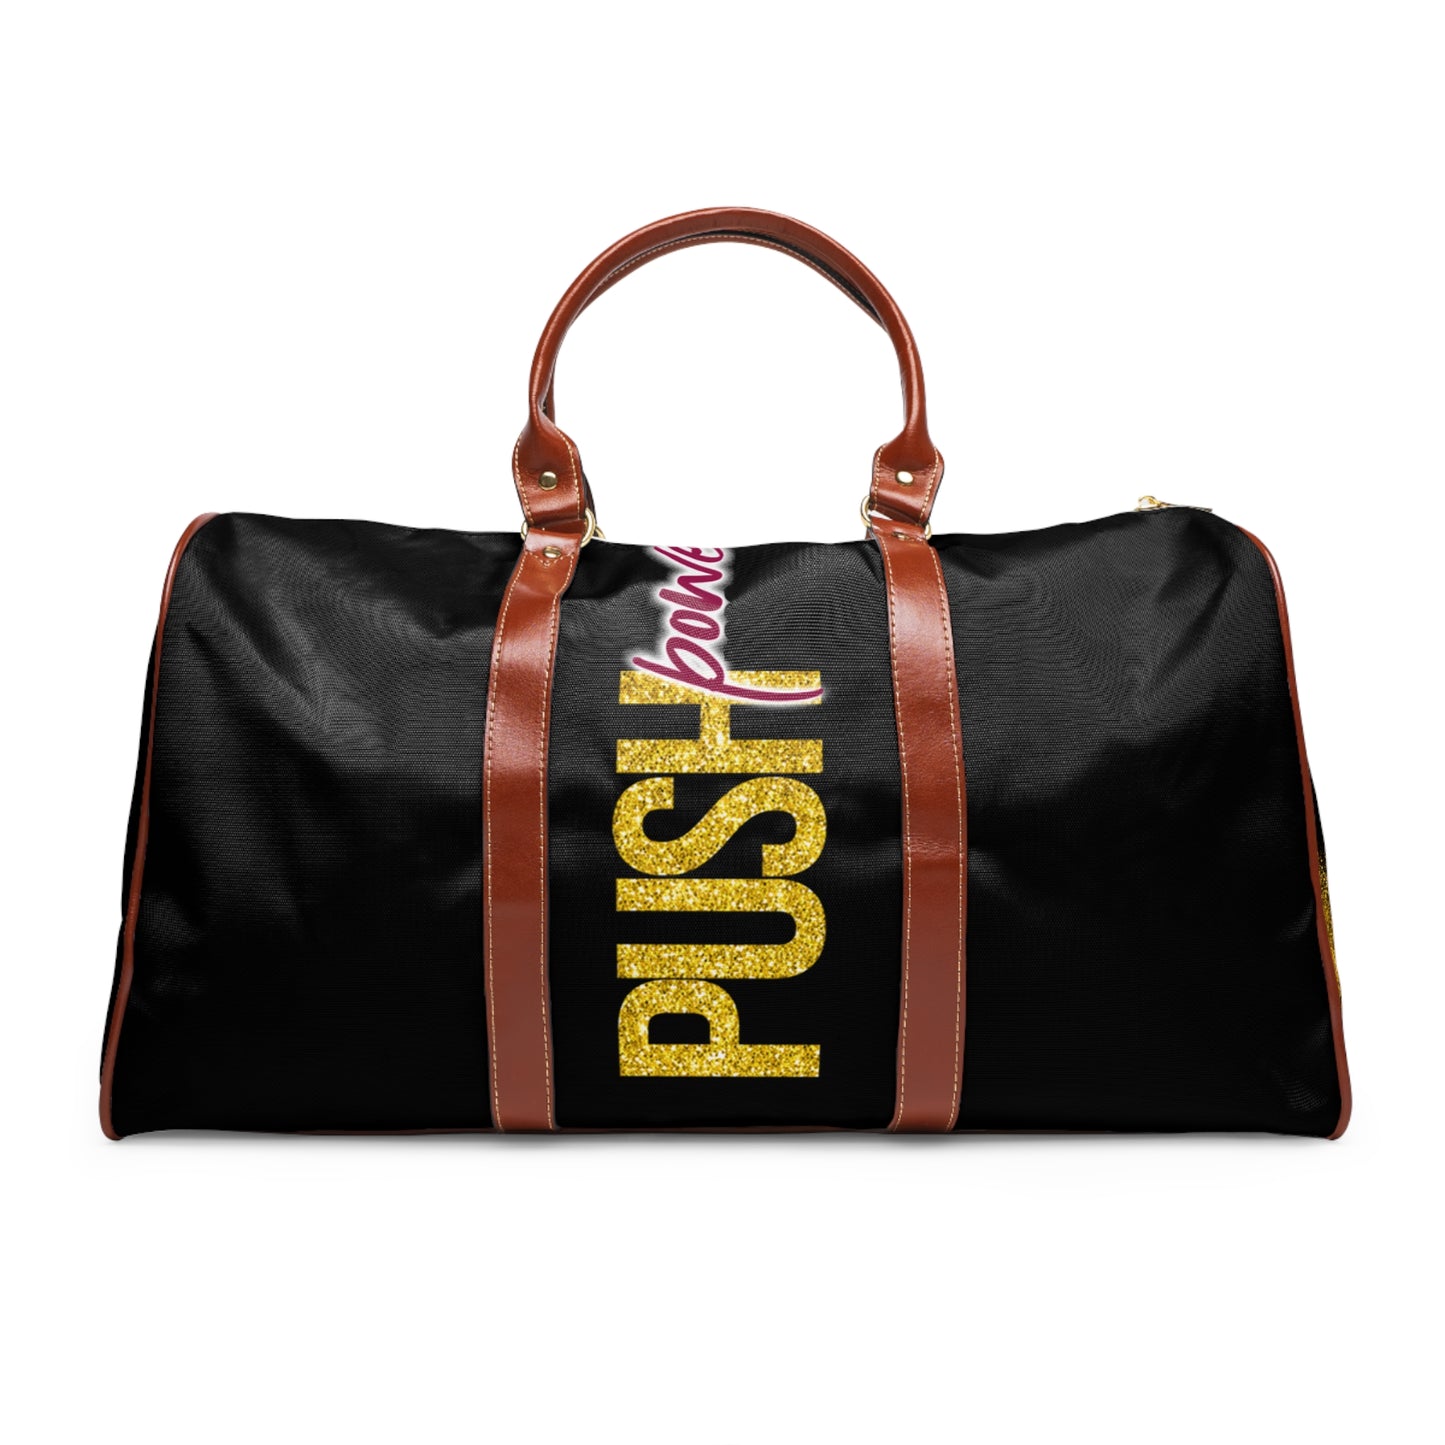 Push Power Boss Waterproof Travel Bag